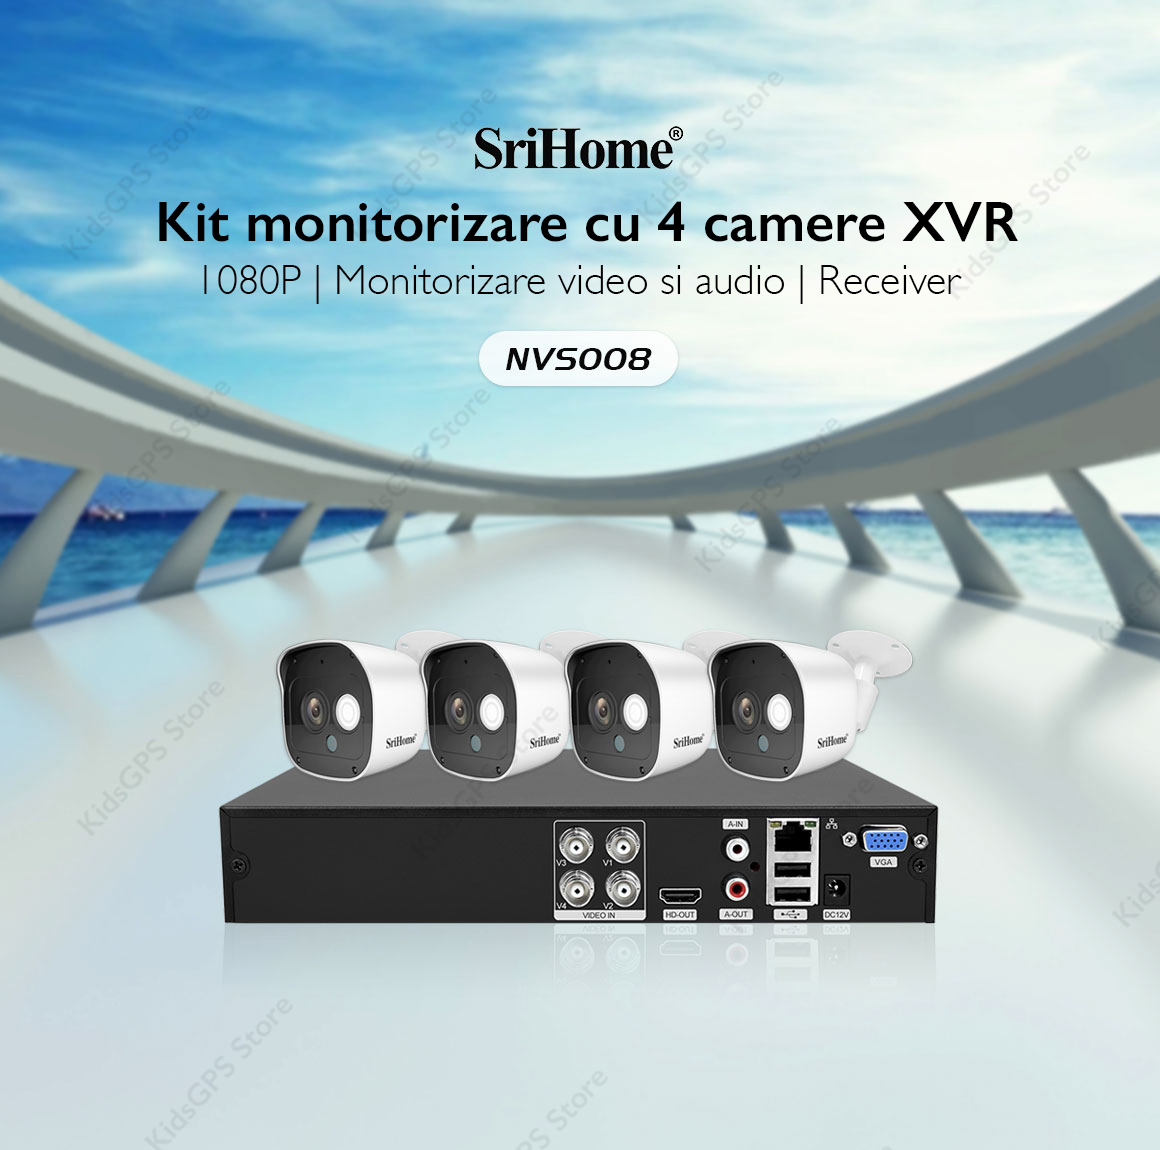 Kit supraveghere video 4 camere SriHome™ NVS008, cu cablu 20m, Full HD, rezistent la apa, inreigstrare video/audio, NVR, functie repeator, night vision, H.265, aplicatie, alb